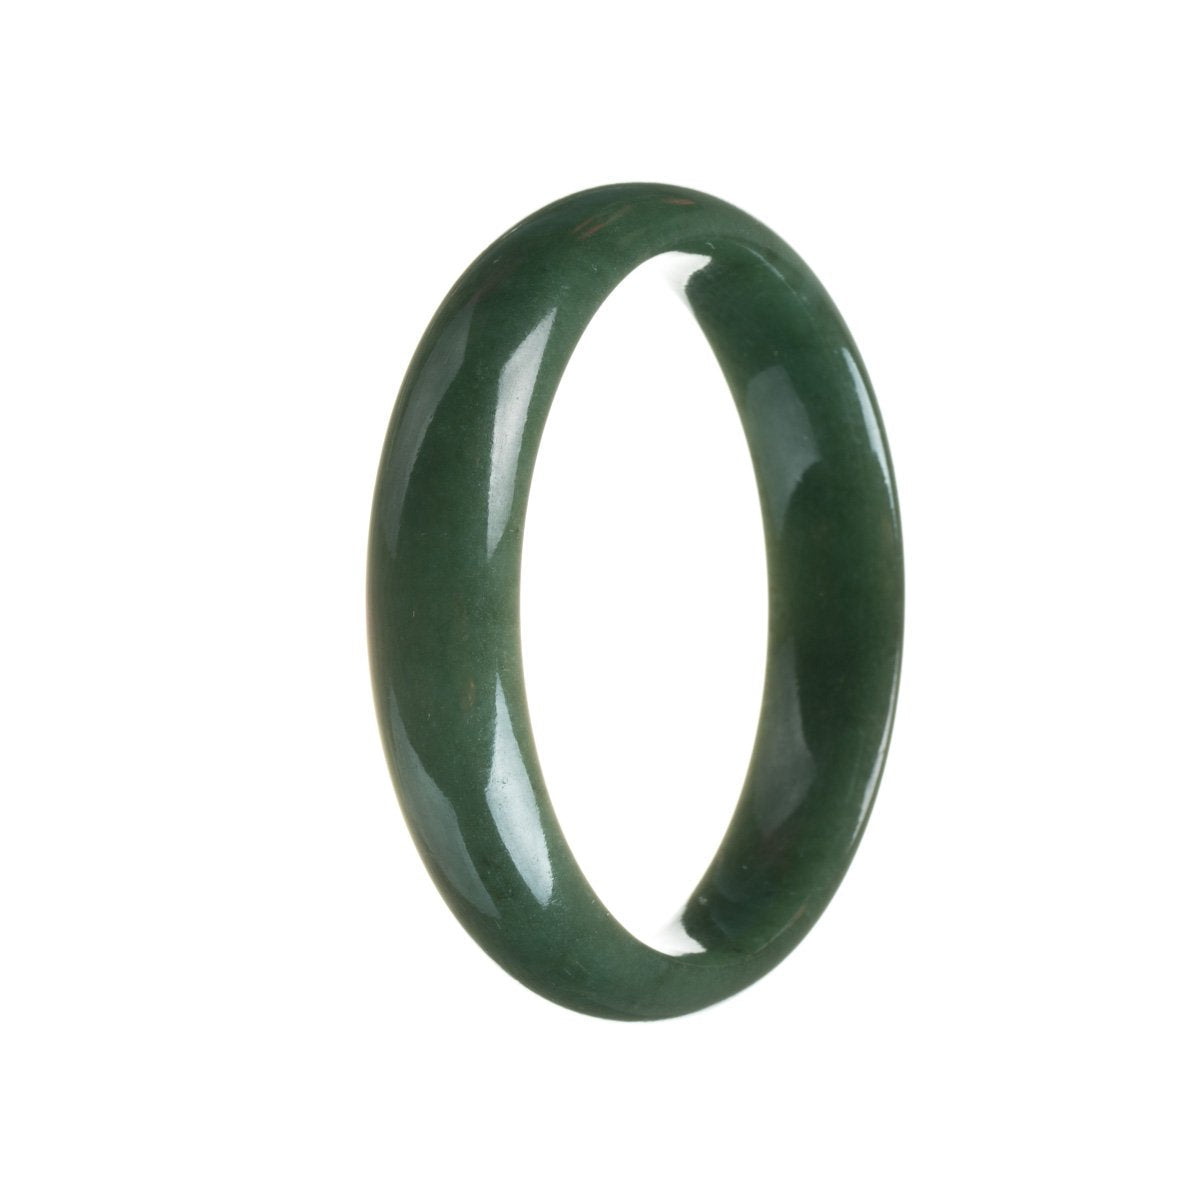 A half moon-shaped deep green jadeite bangle bracelet, exuding natural beauty and elegance.